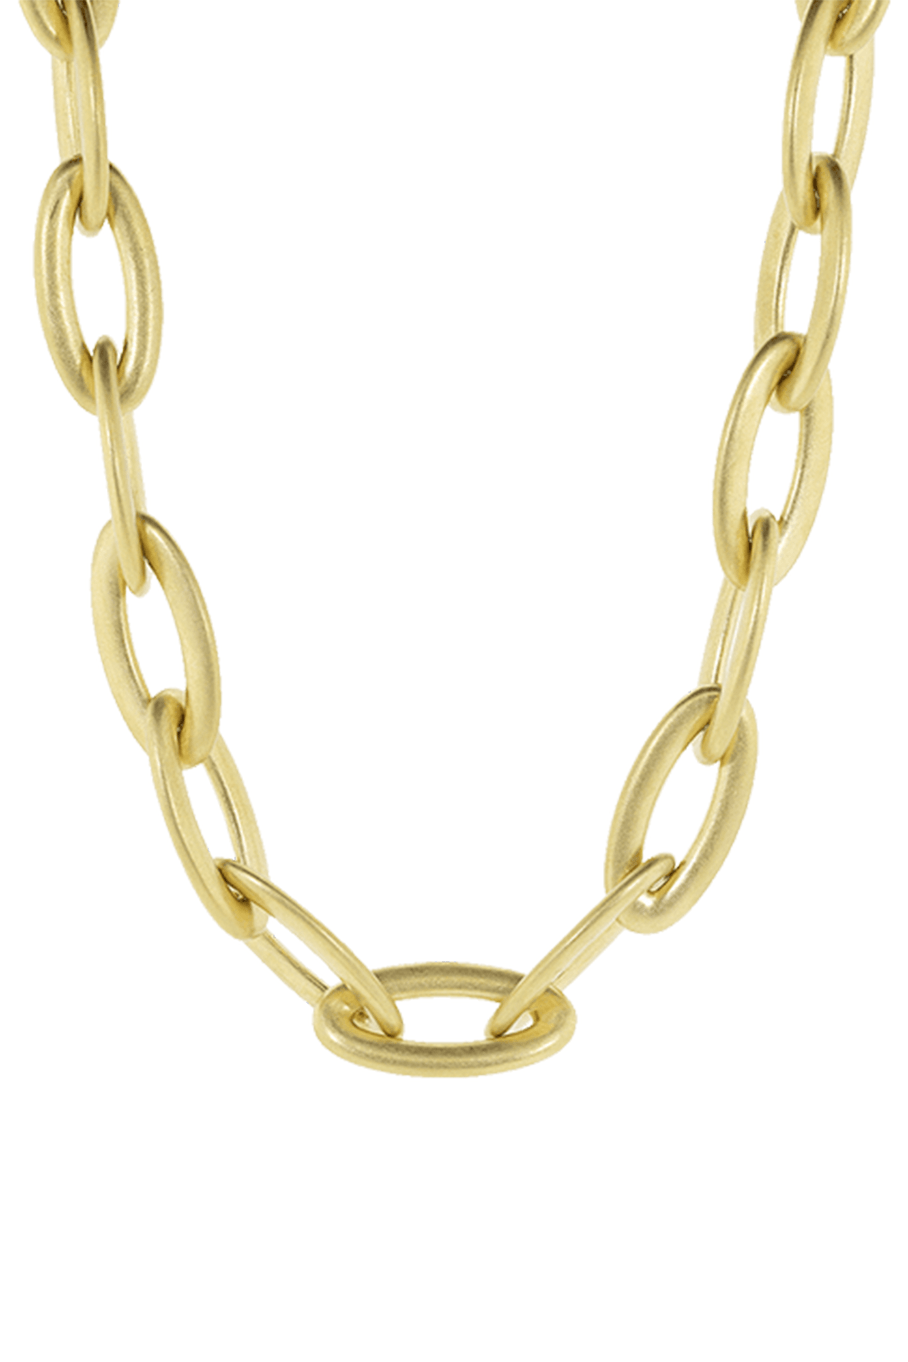 SIDNEY GARBER-Oval Link Tivoli Necklace-YELLOW GOLD